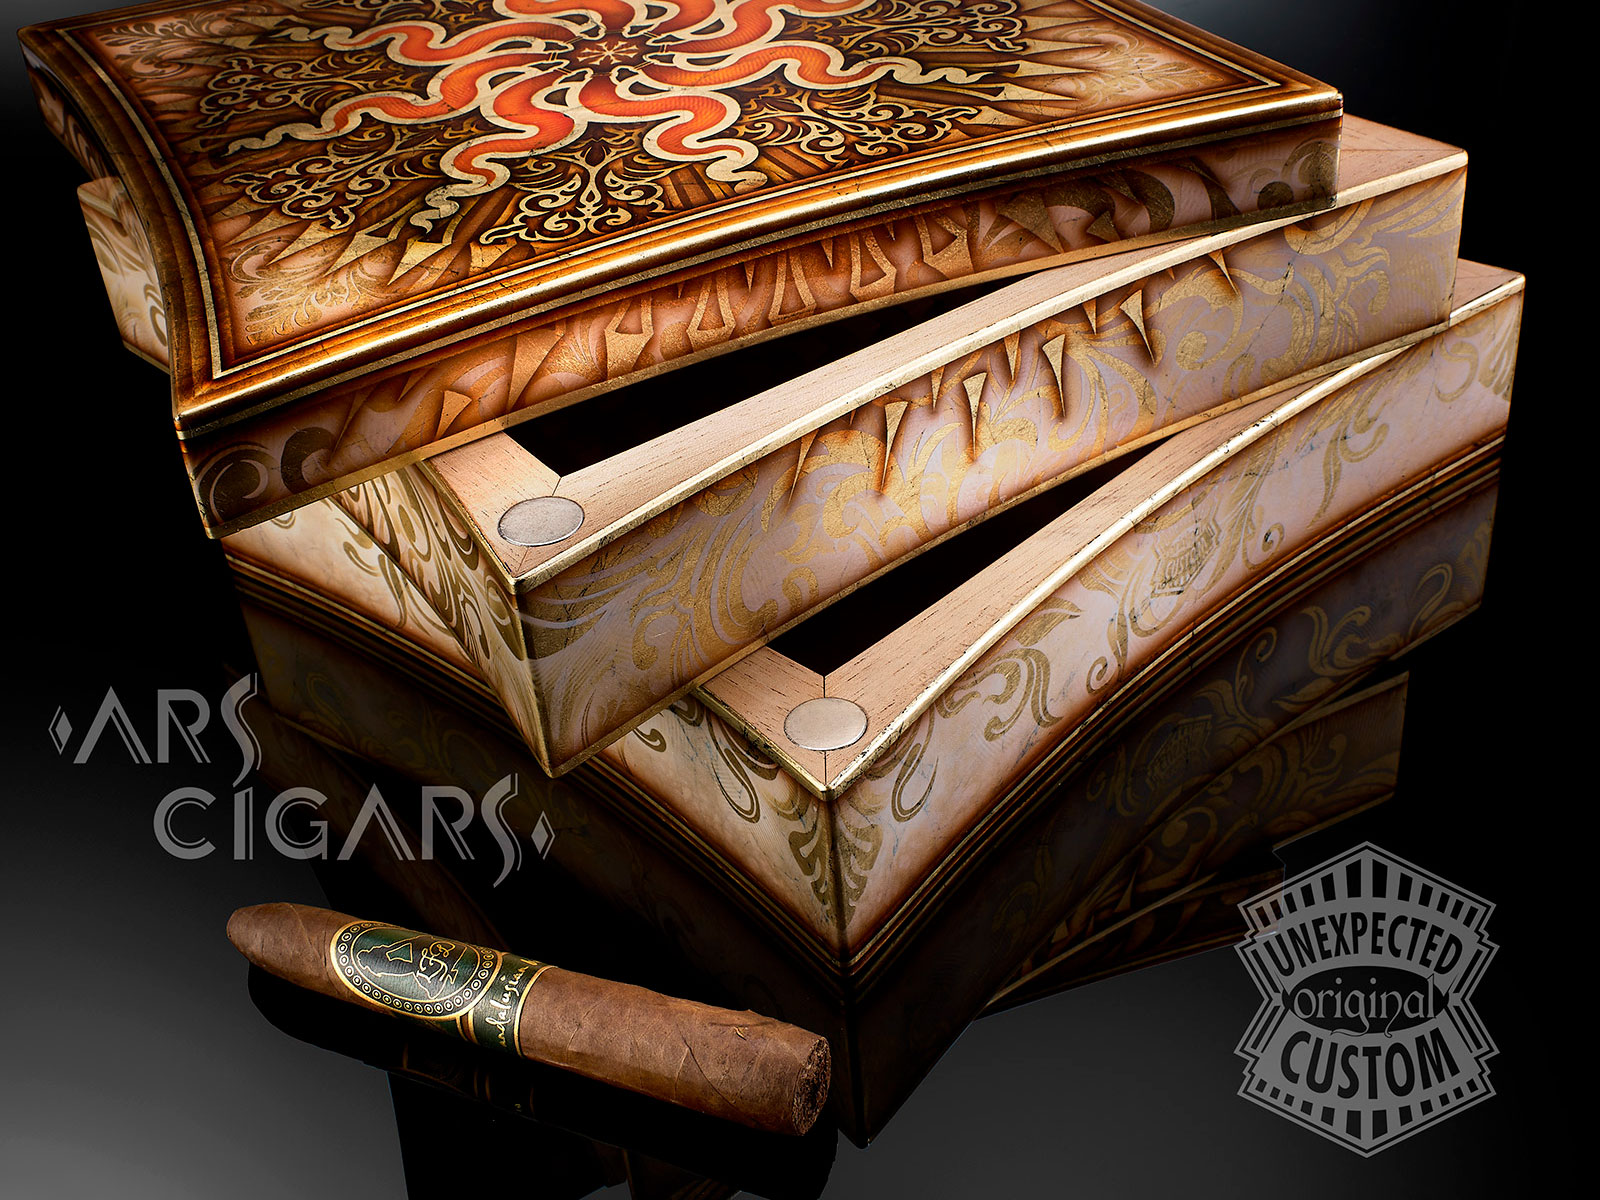 cigar humidor unexpected custom